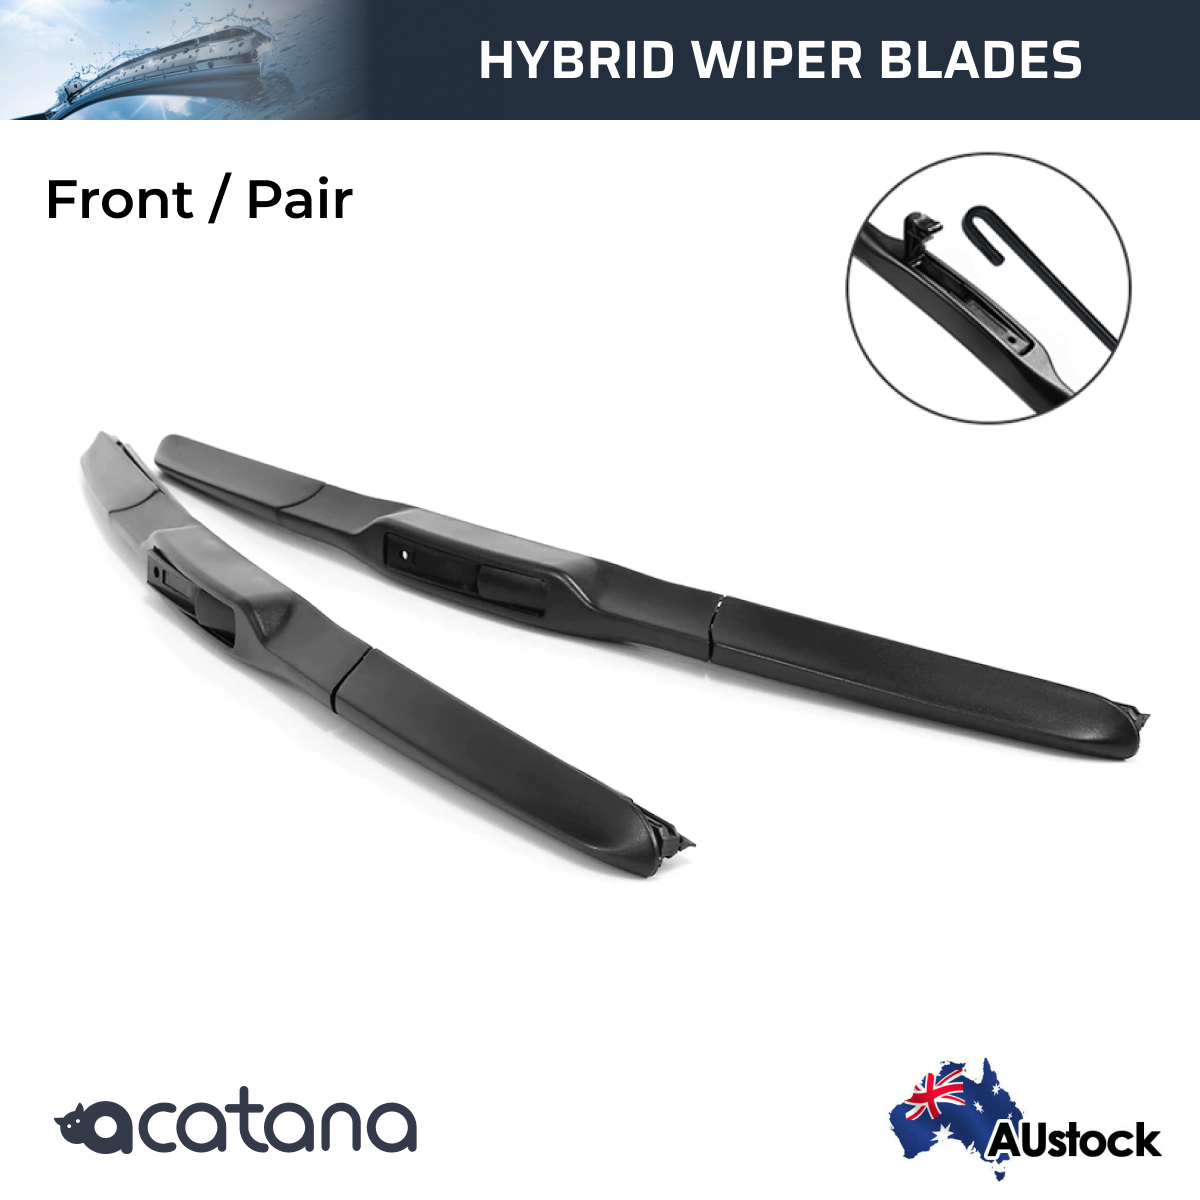 Windscreen Wiper Blades for Hyundai Santa Fe TM 2018 2019 2020 26 + 16" | eBay 2020 Hyundai Santa Fe Wiper Blade Replacement